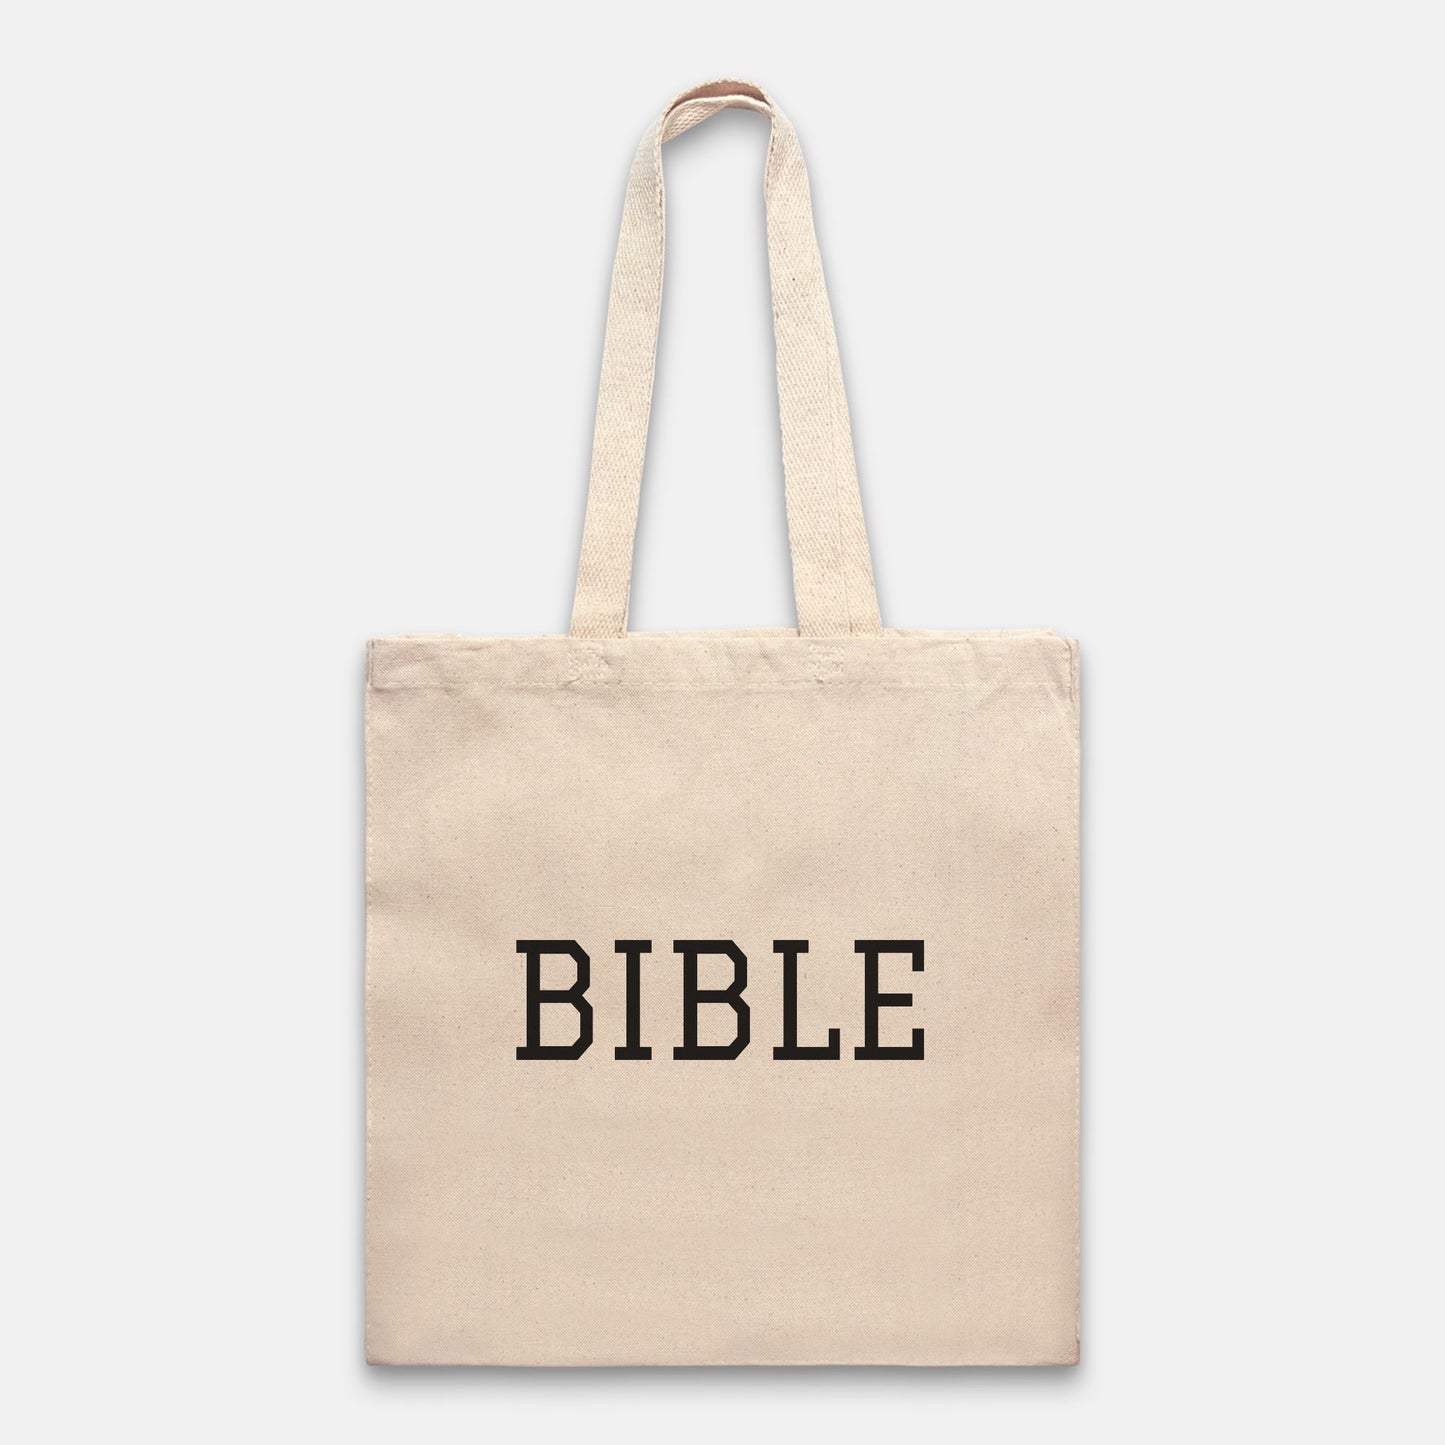 BIBLE - Cotton Canvas Tote Bag